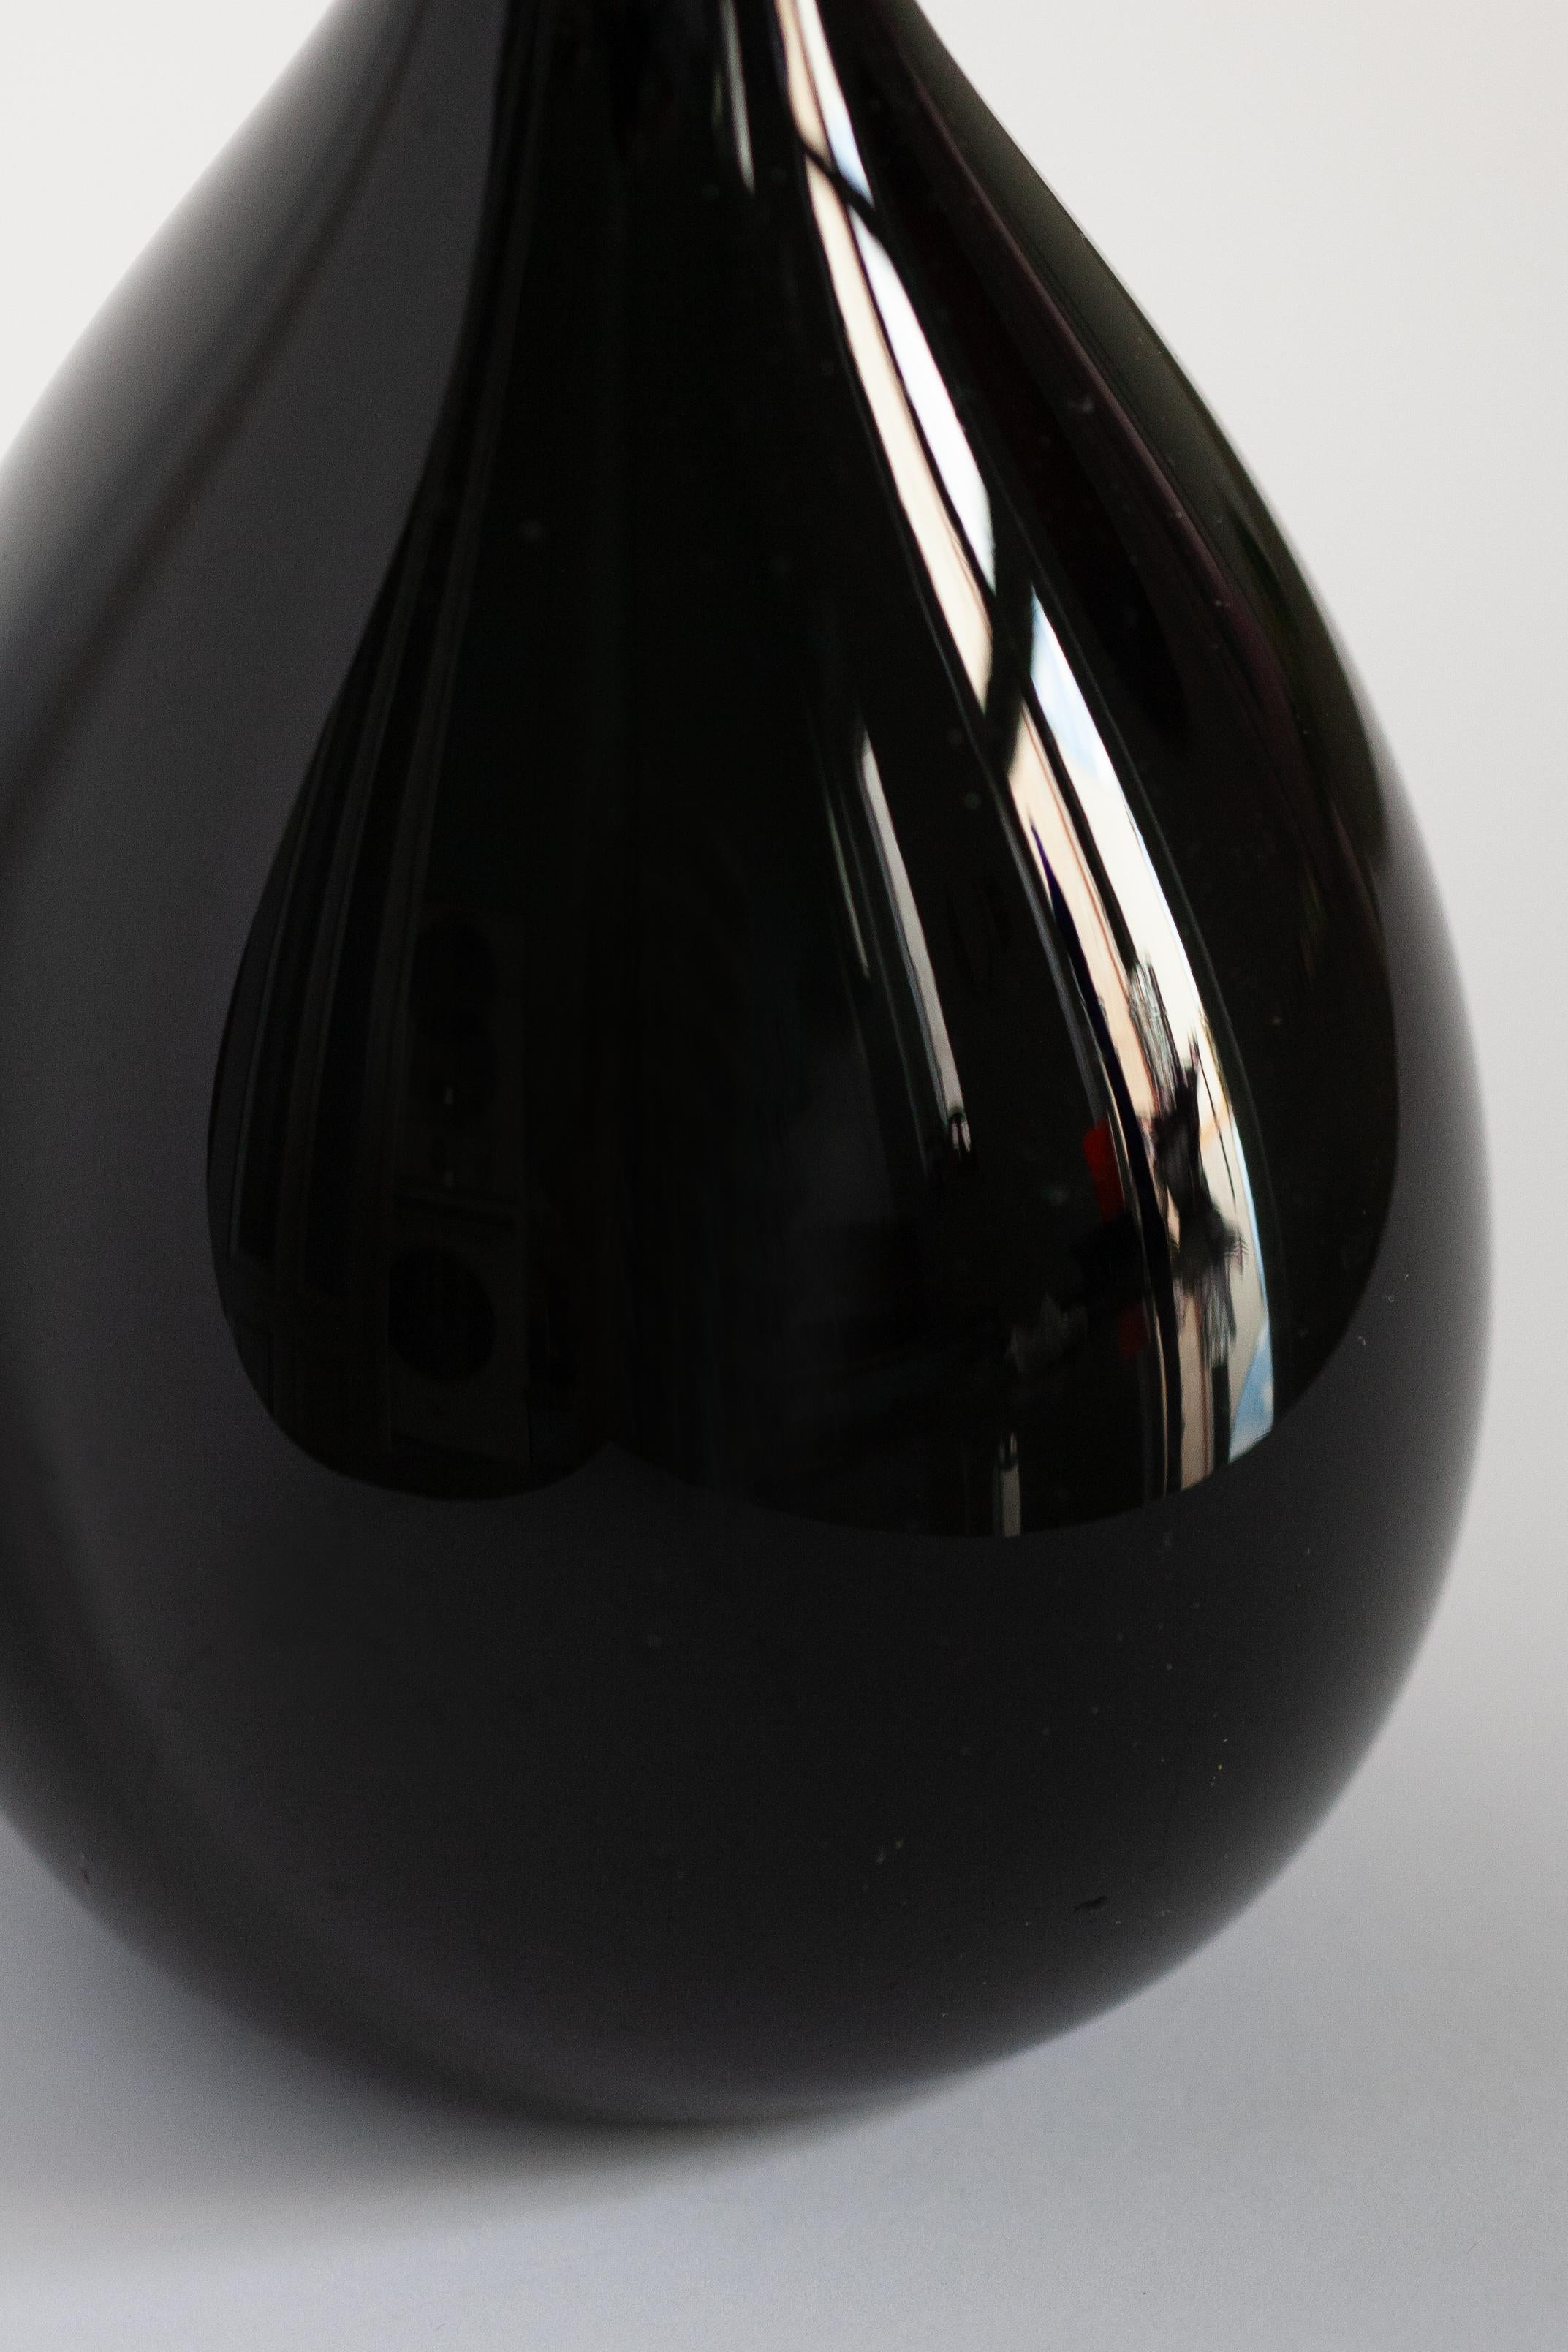 Mid Century Vintage Slim Black Decorative Glass Vase, Europe, 1960s For Sale 6